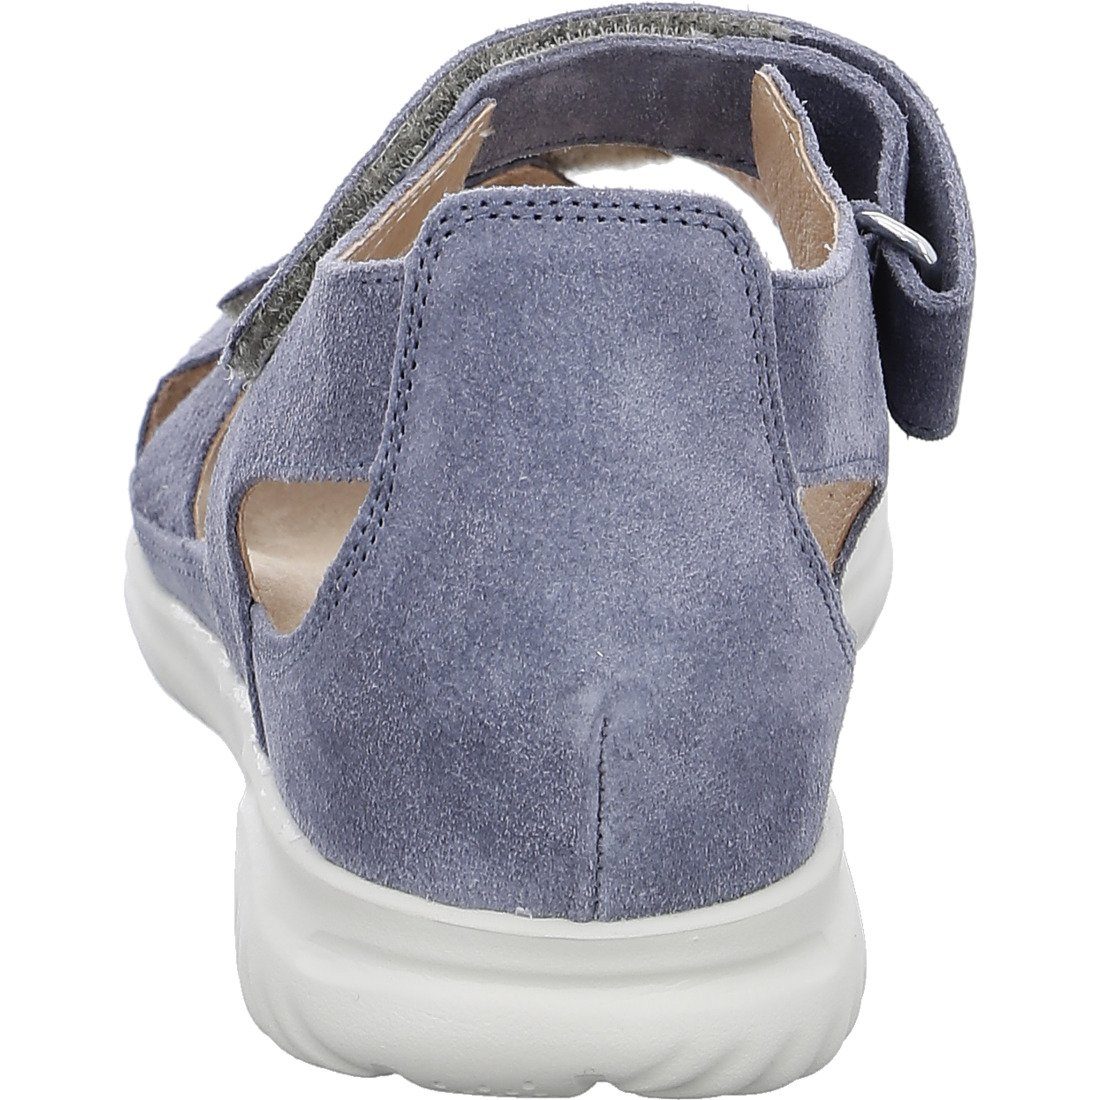 Hartjes Hartjes Schuhe, Sandalette - Velours blau 048735 Sandalette Breeze